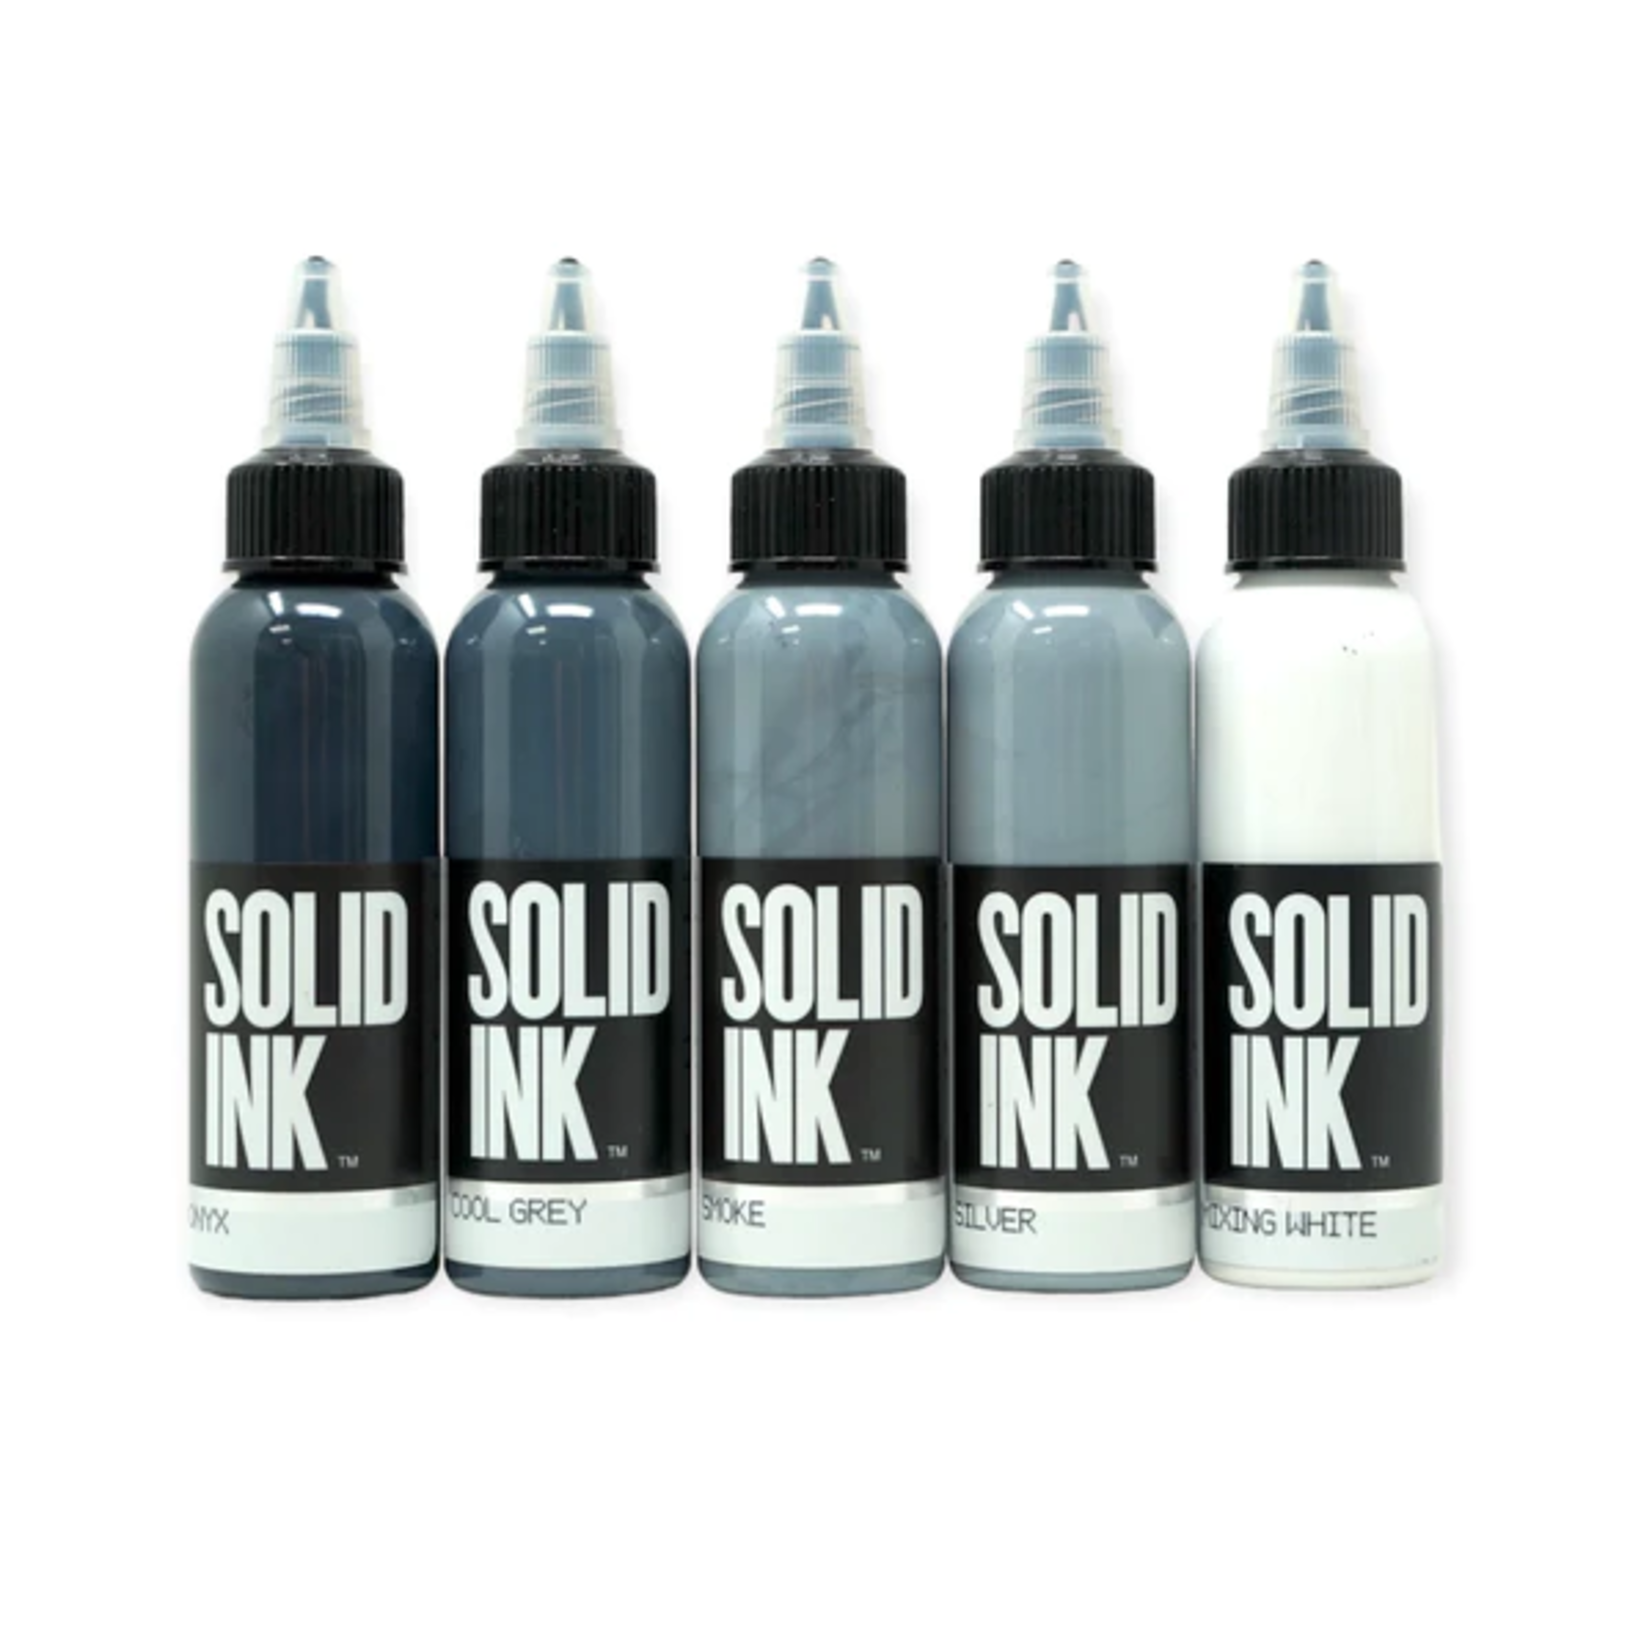 SOLID INK Tattoo Ink PURPLE Color Tones Single Individual Bottles 1 oz  Original  eBay